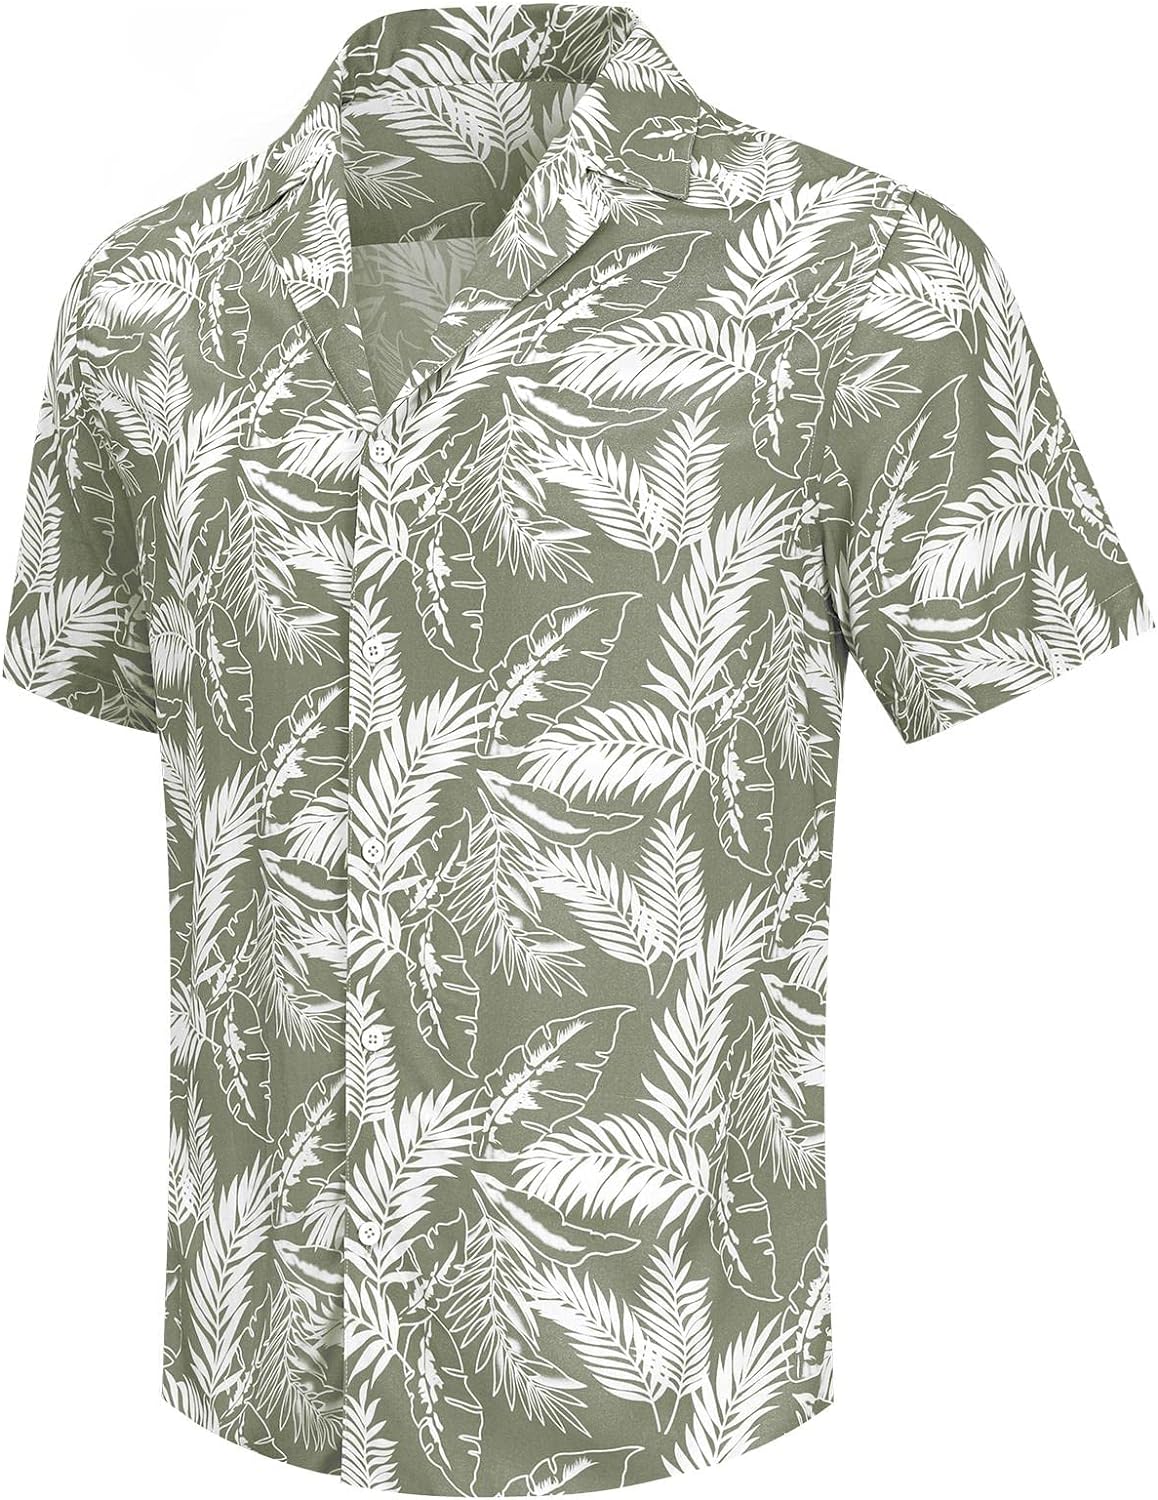 JEKAOYI Mens Casual Linen Button Down Short Sleeve Shirts Beach Summer Spread Collar Pocket Tops